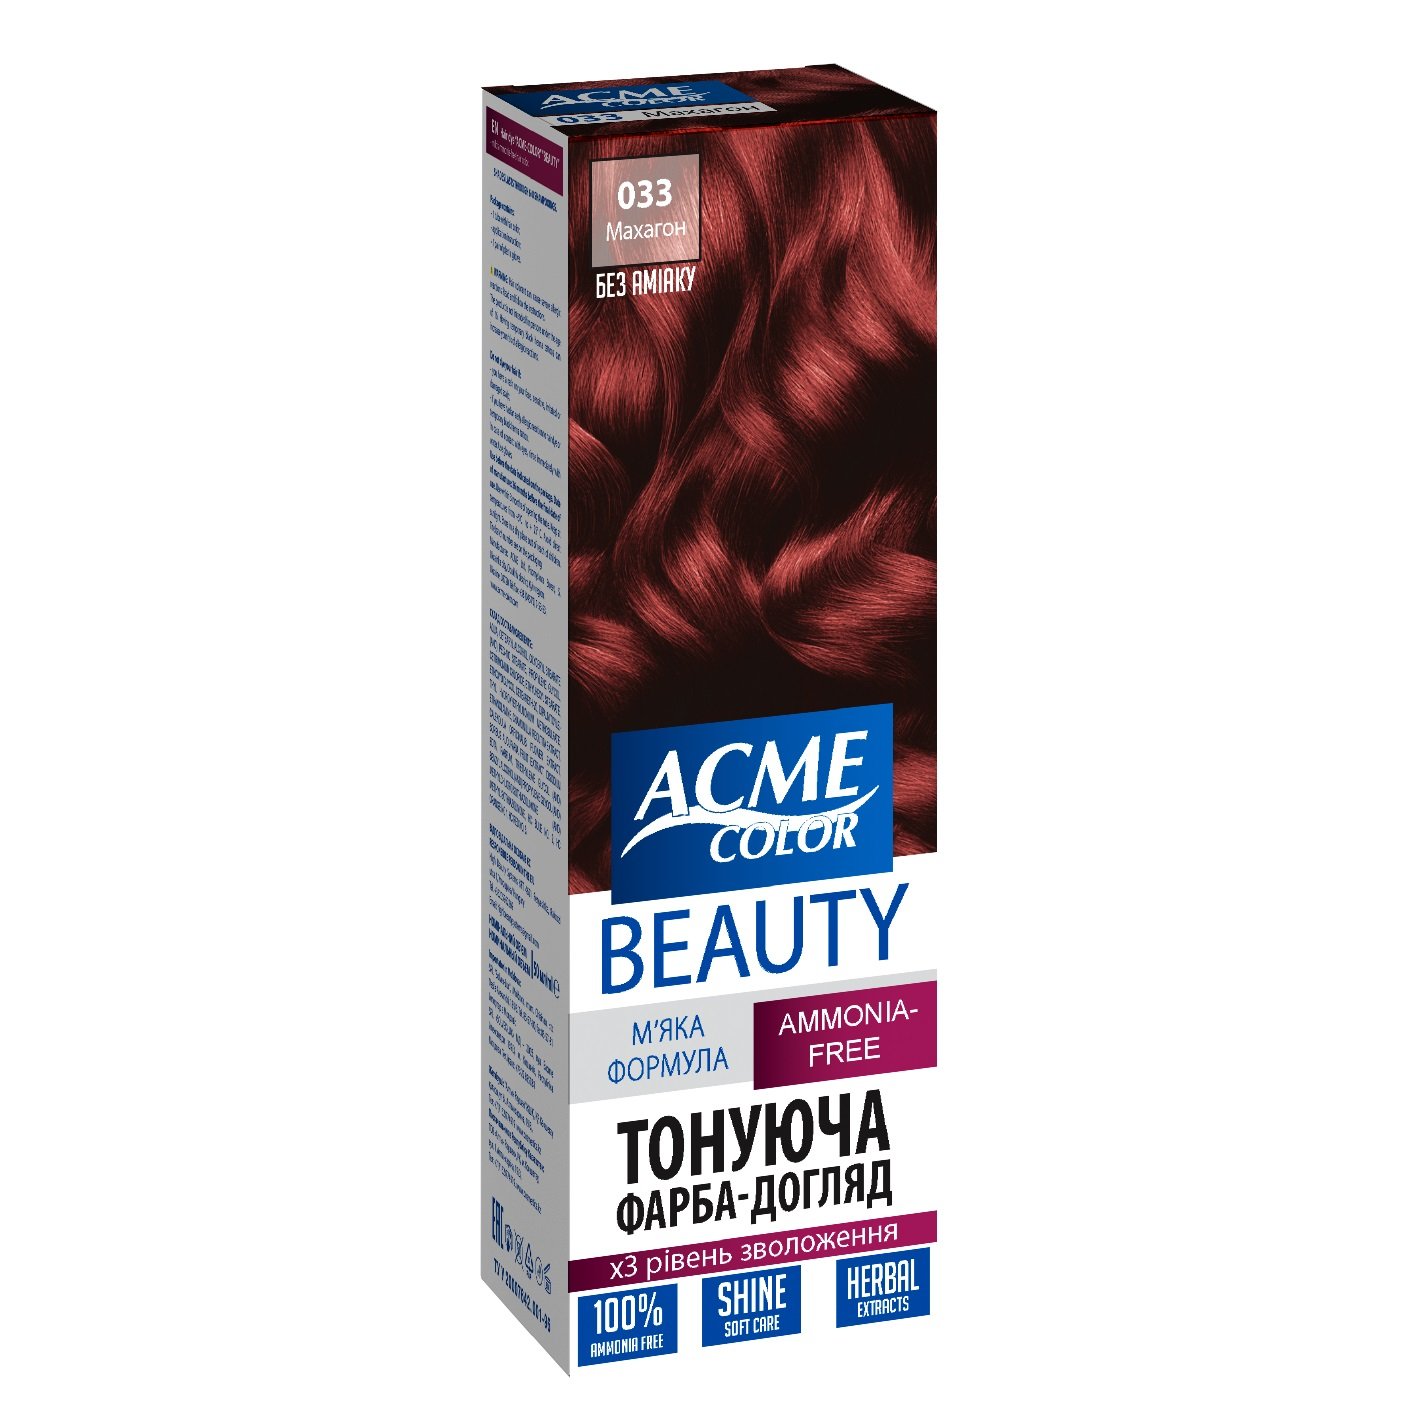 Гель-краска для волос Acme-color Beauty, оттенок 033 (Махагон), 69 г - фото 1